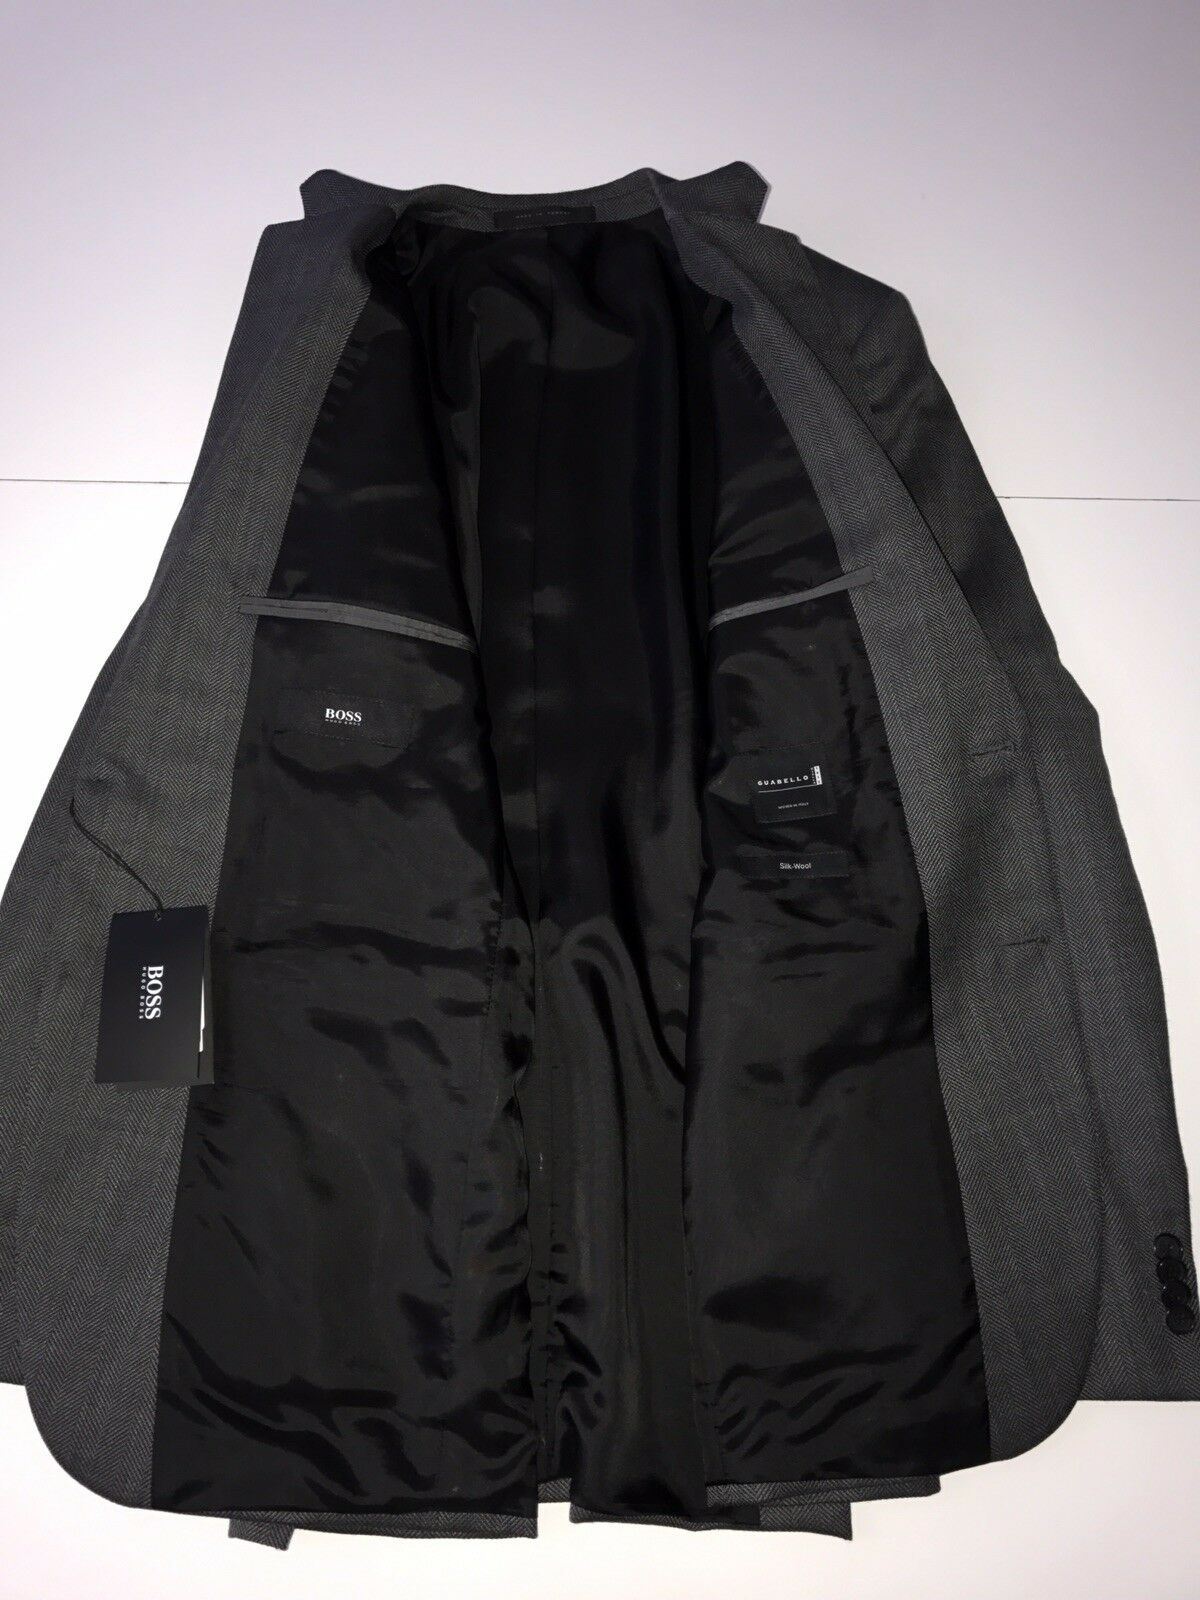 NWT $695 Boss Hugo Boss Grand Silk / Wool  Dark Gray Sport Coat Jacket 38R US